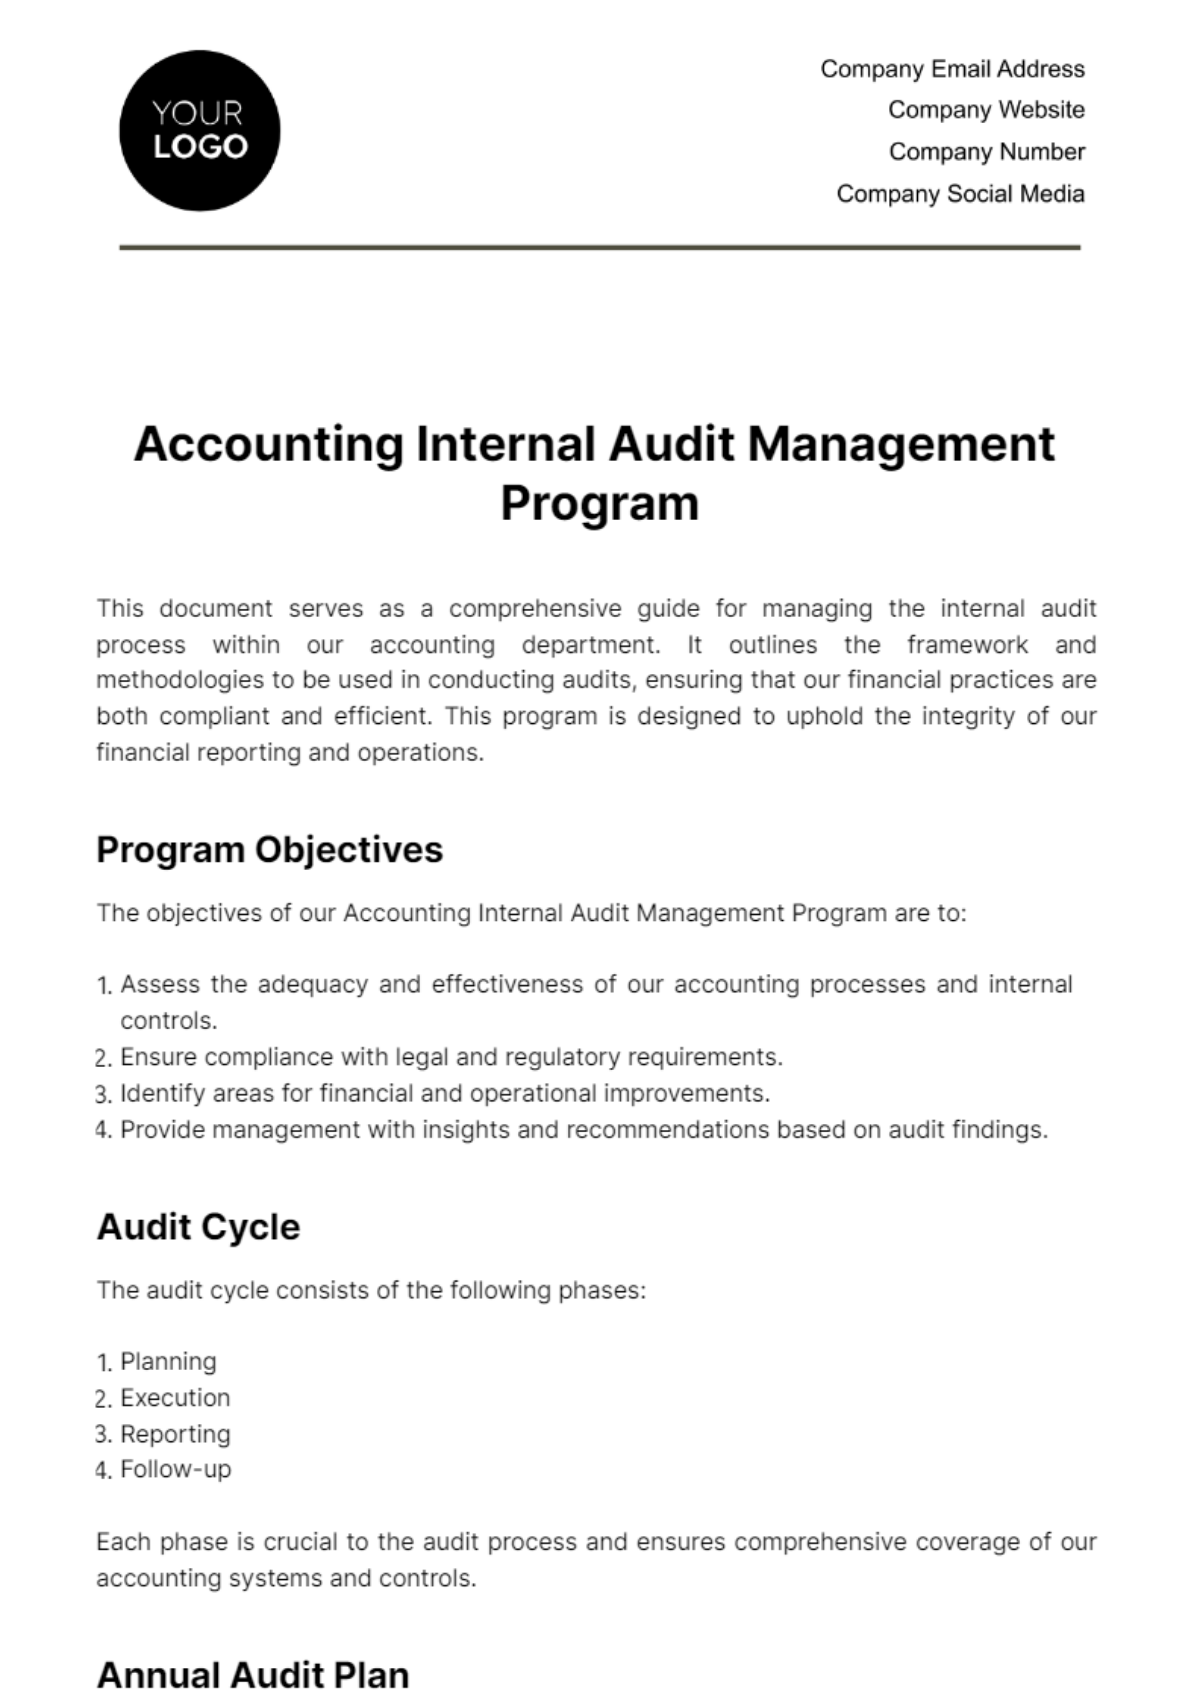 Free Accounting Internal Audit Management Program Template